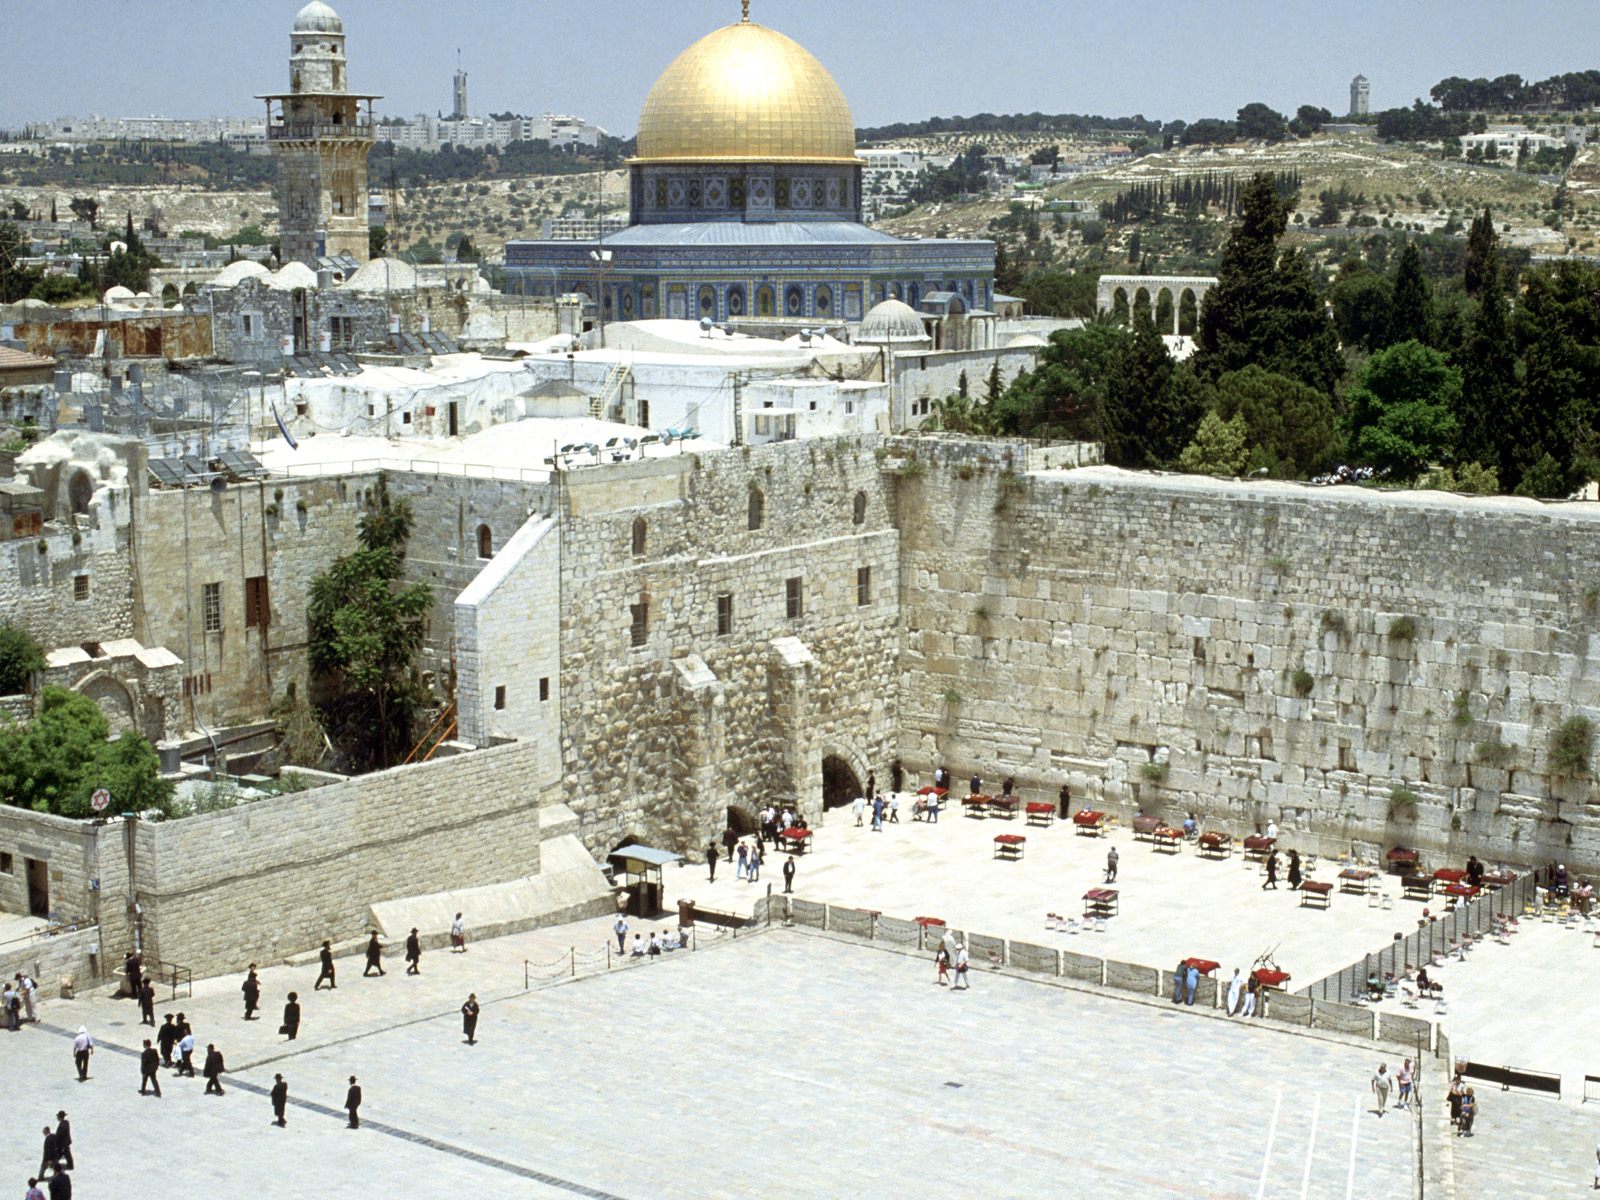 western-wall-and-omar-mosque-jerusalem-israel-1-1600x1200.jpg